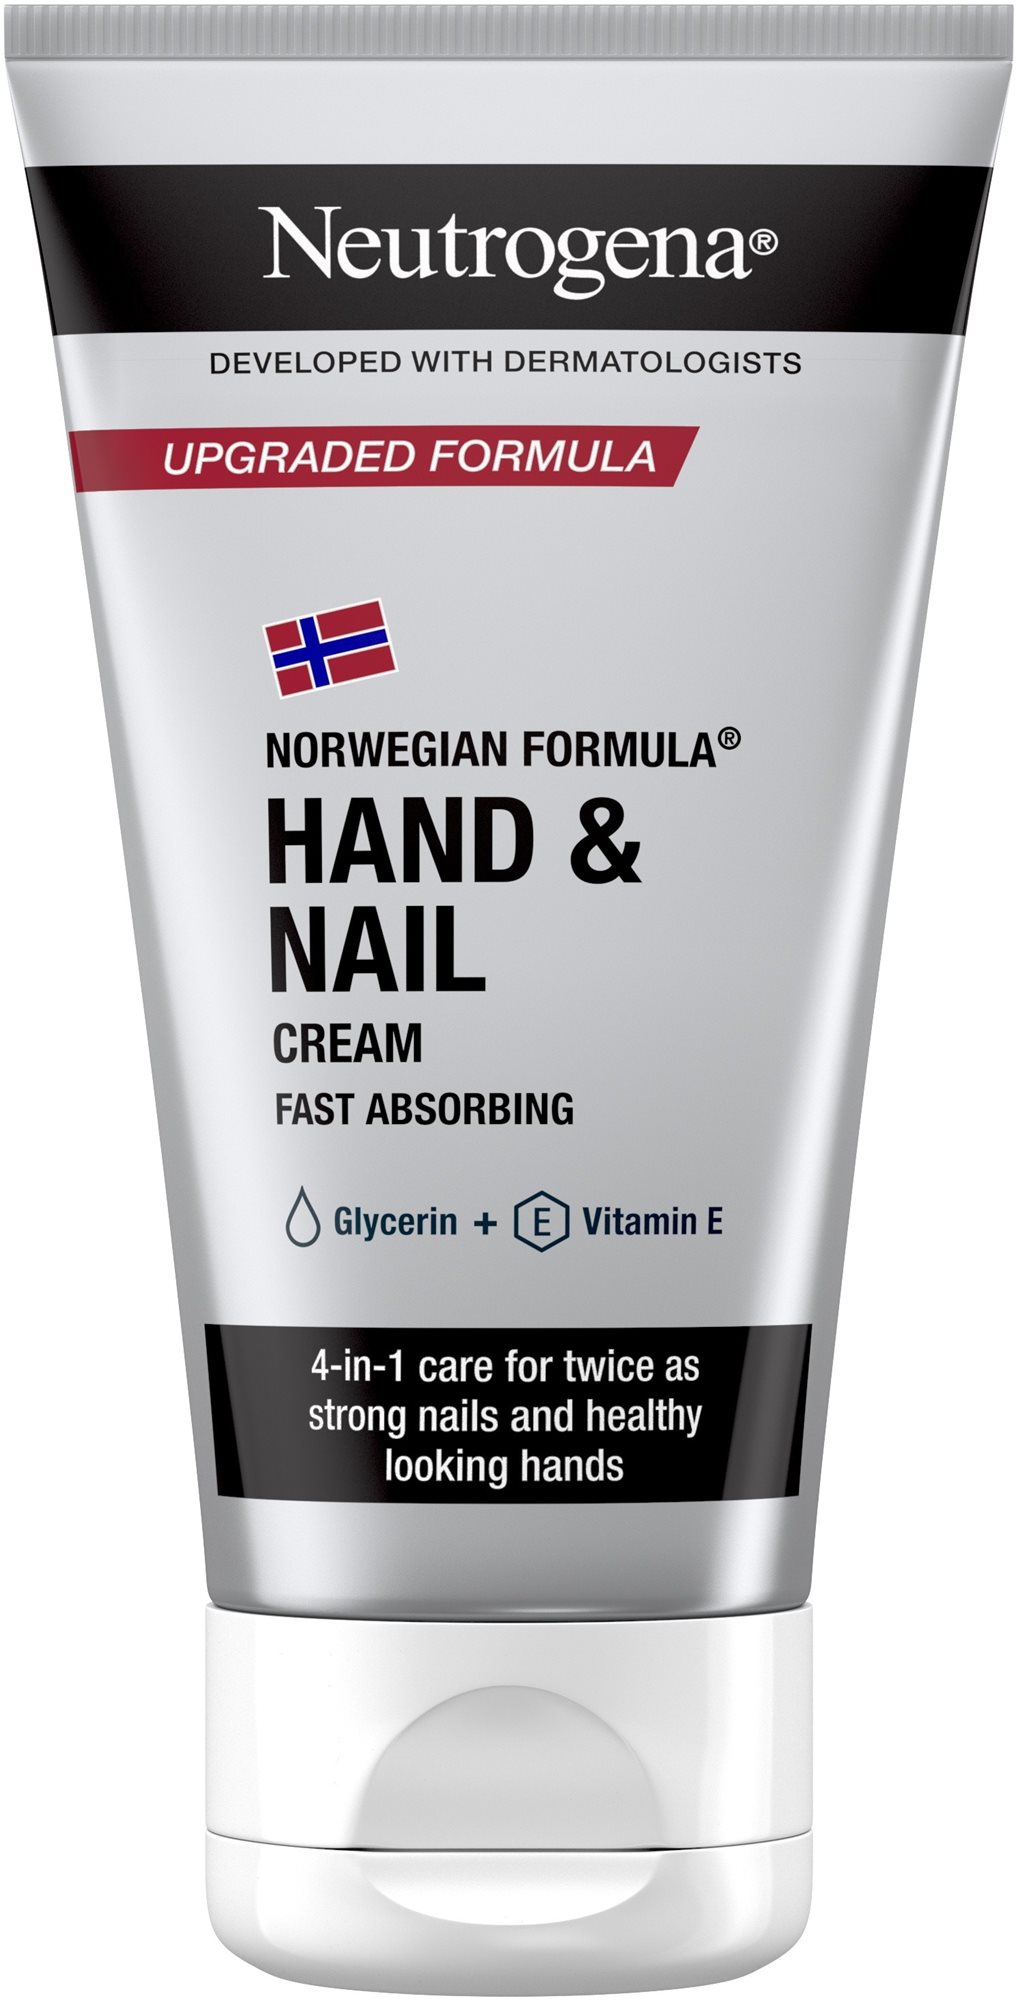 NEUTROGENA Hand & Nail Cream 75 ml